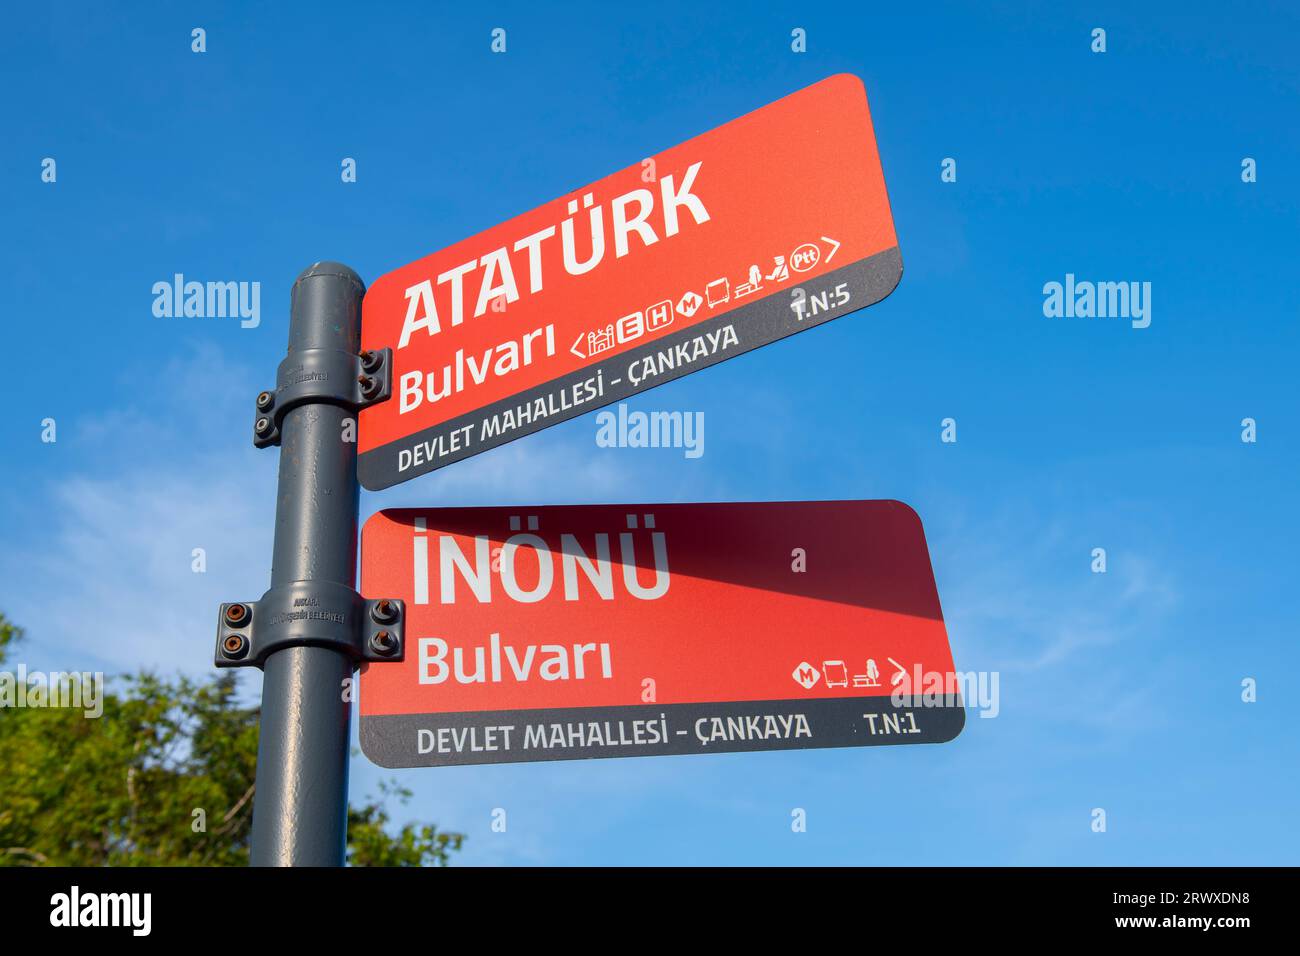 Road sign of Ataturk Boulevard and Inonu Boulevard near Grand National Assembly in city center of Ankara, Turkey. Stock Photo